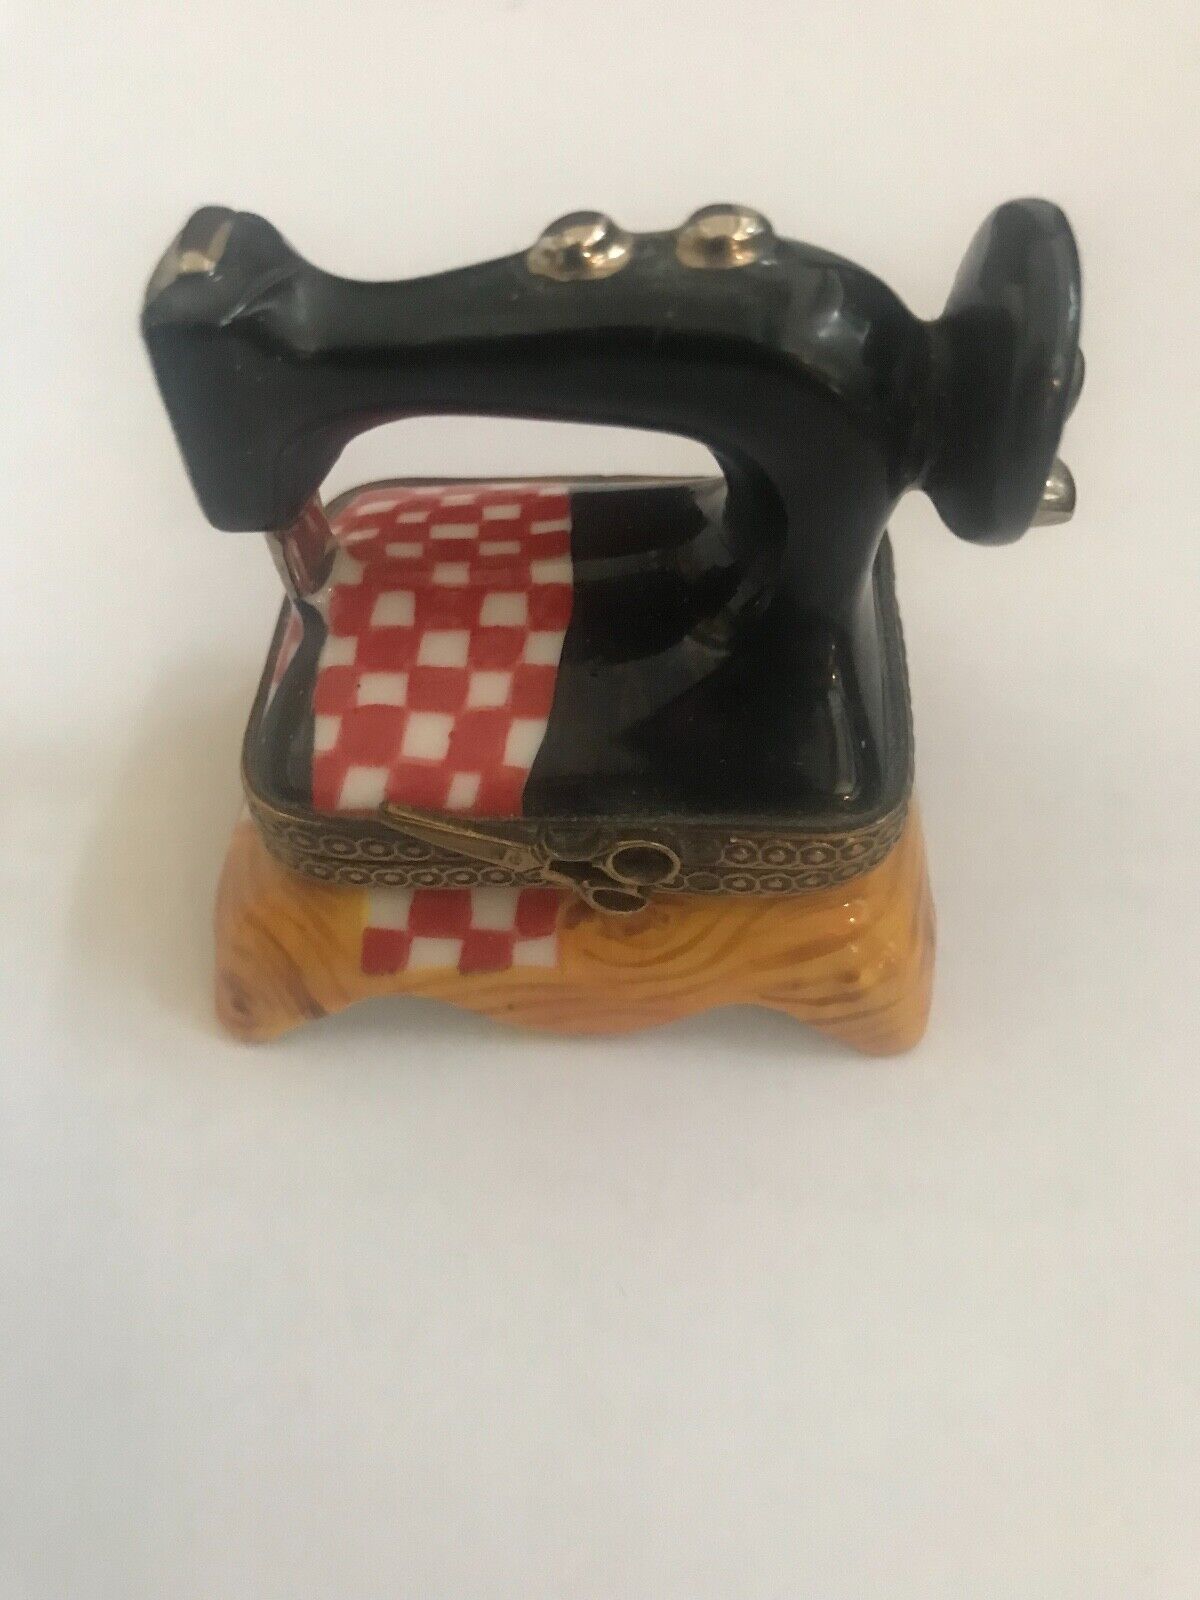 Limoges Box Old-Fashioned Sewing Machine Scissors Clasp Spools of Thread inside Ograniczona SPRZEDAŻ, tanio